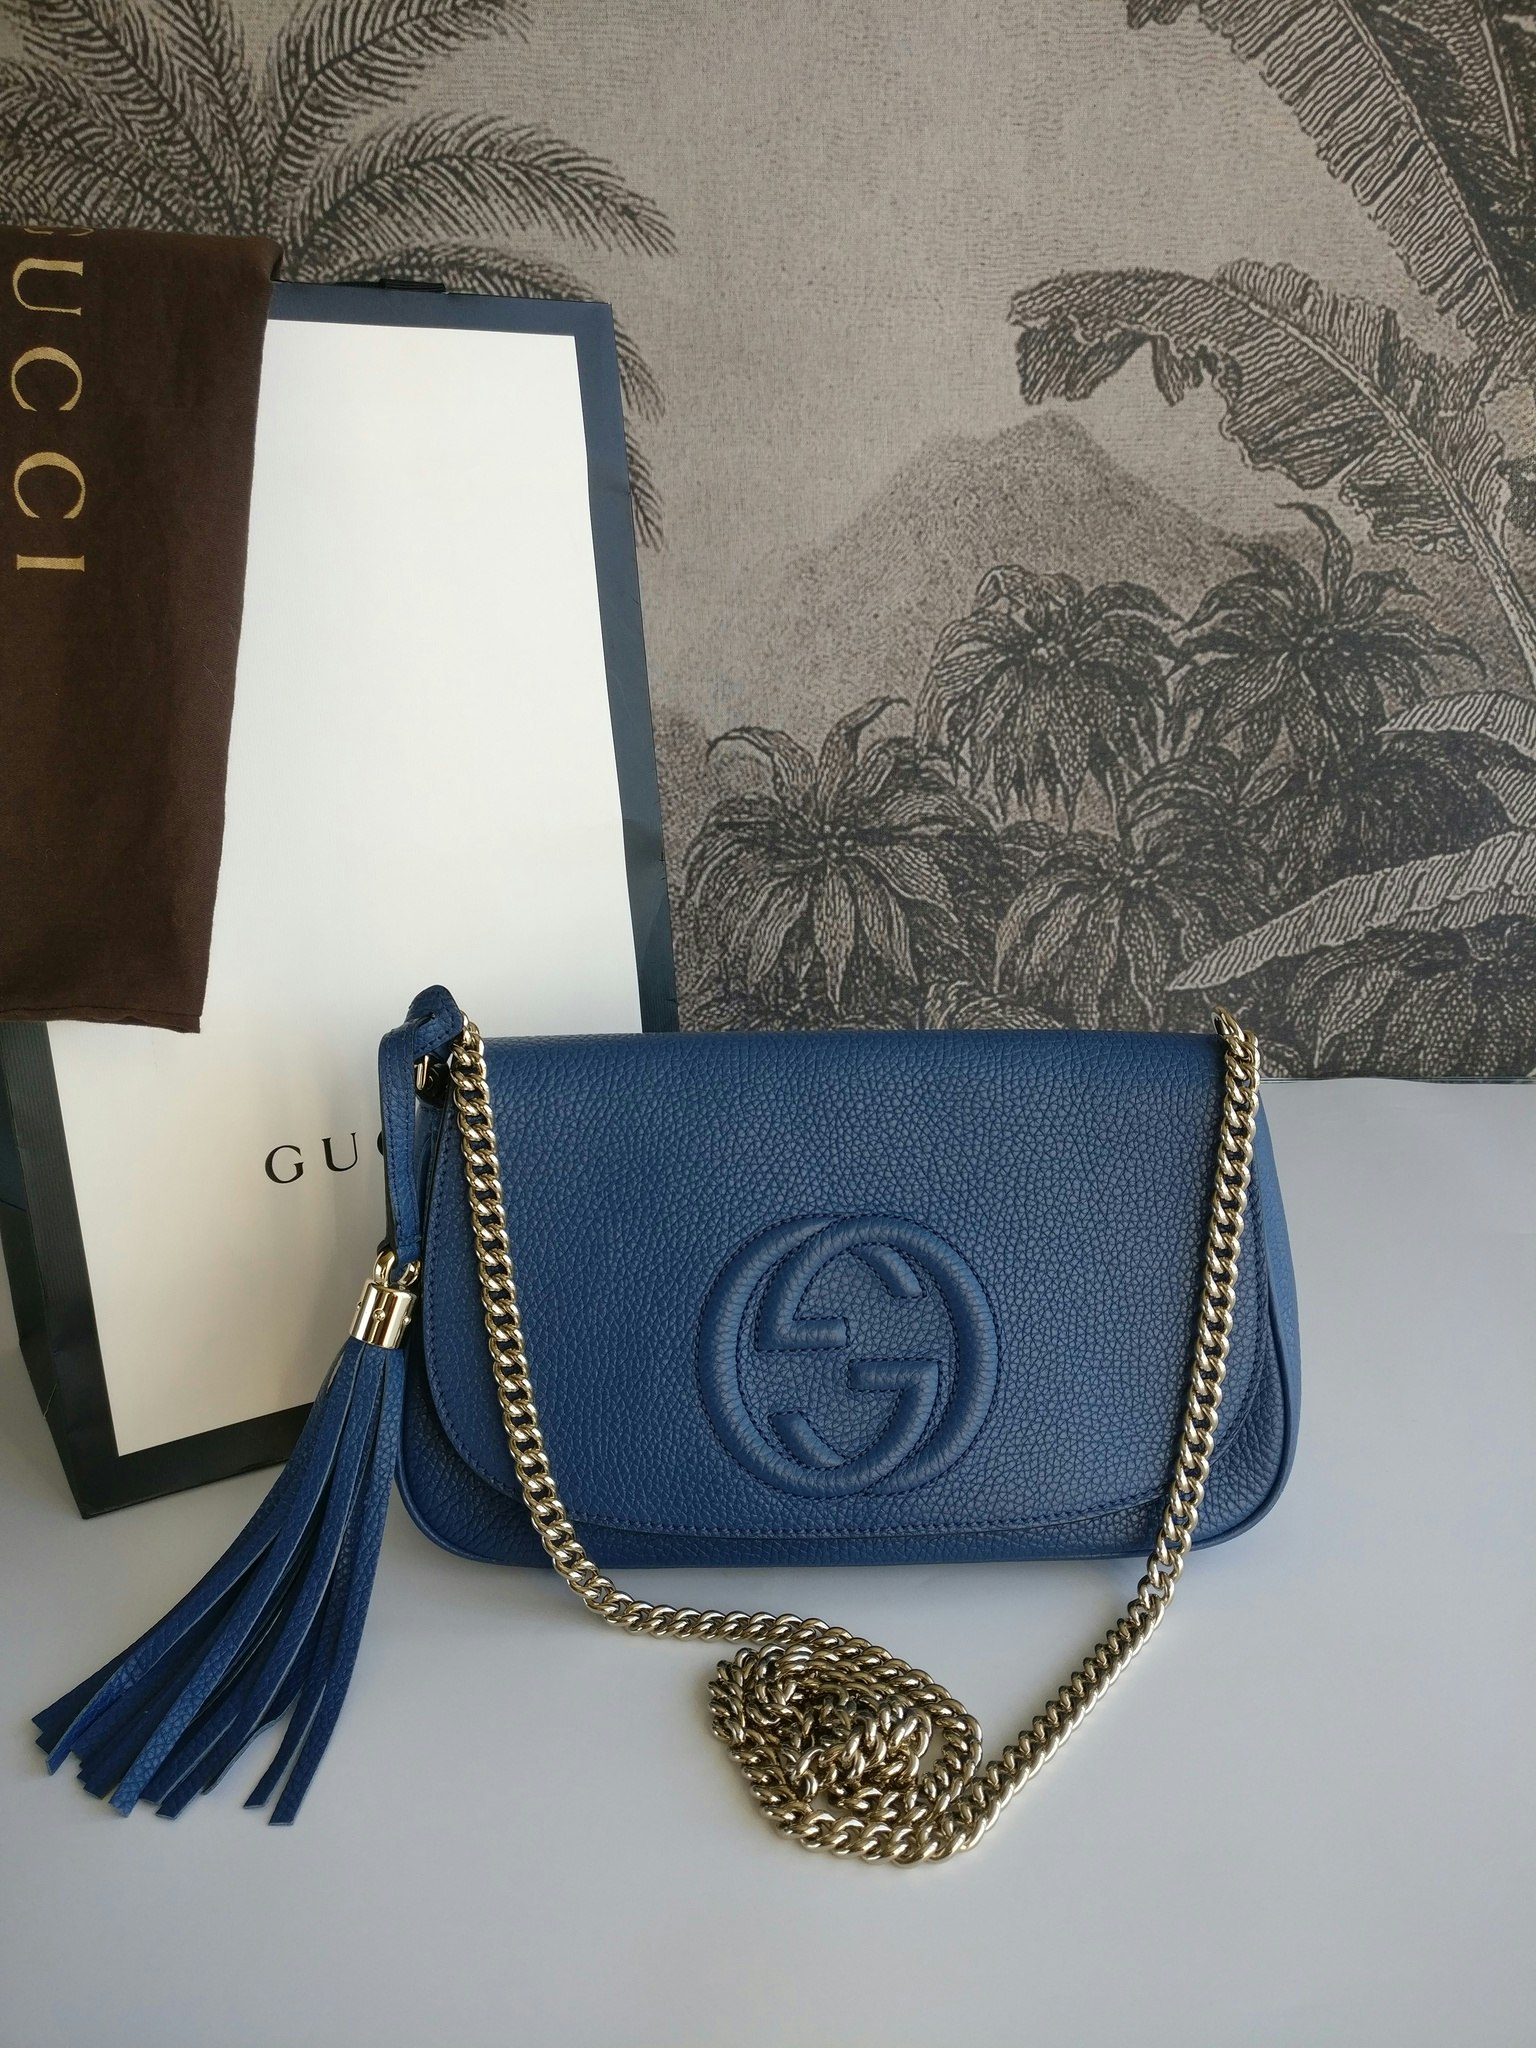 Gucci Soho Long flap chain bag - Good or Bag